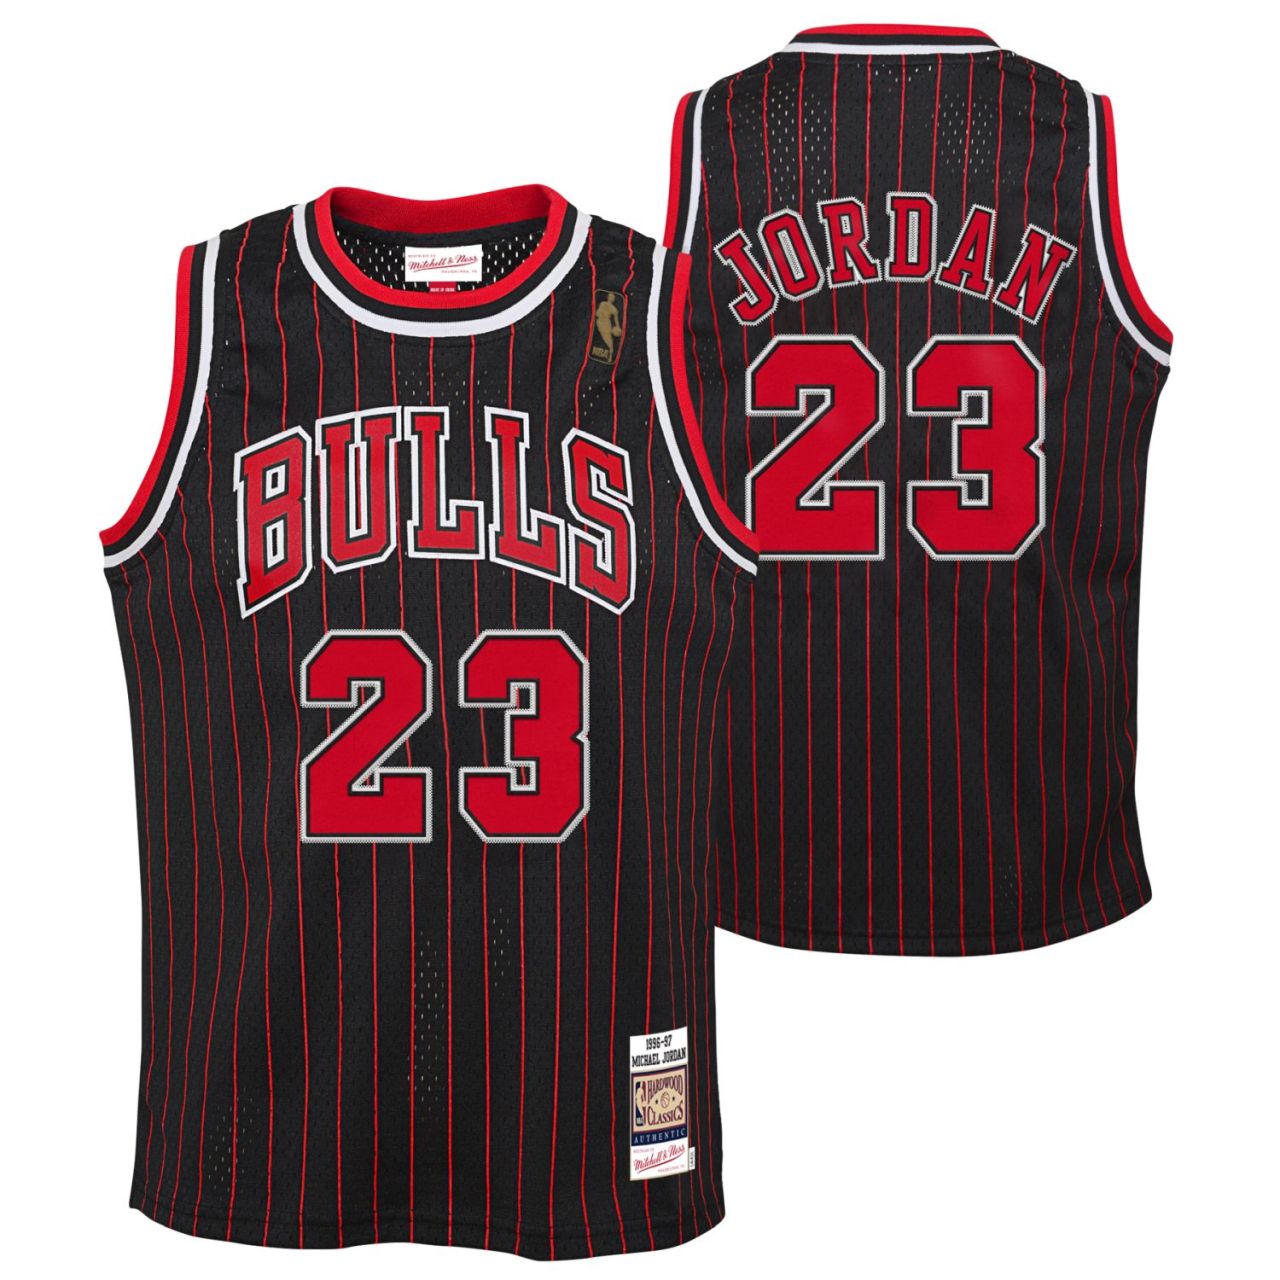 Authentic Kinder Jersey Chicago Bulls 1996 Michael Jordan